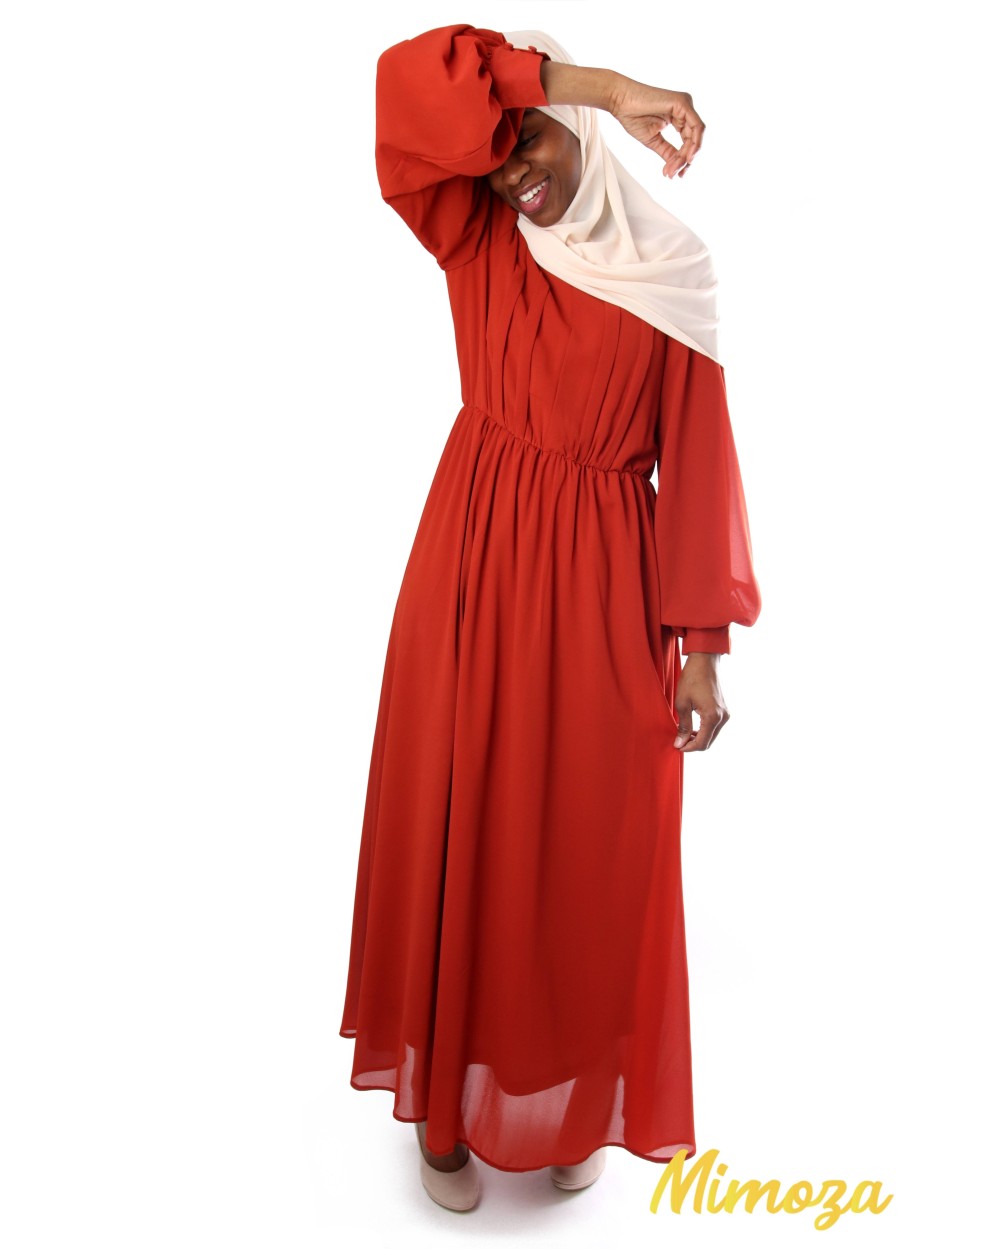 brick red color dress